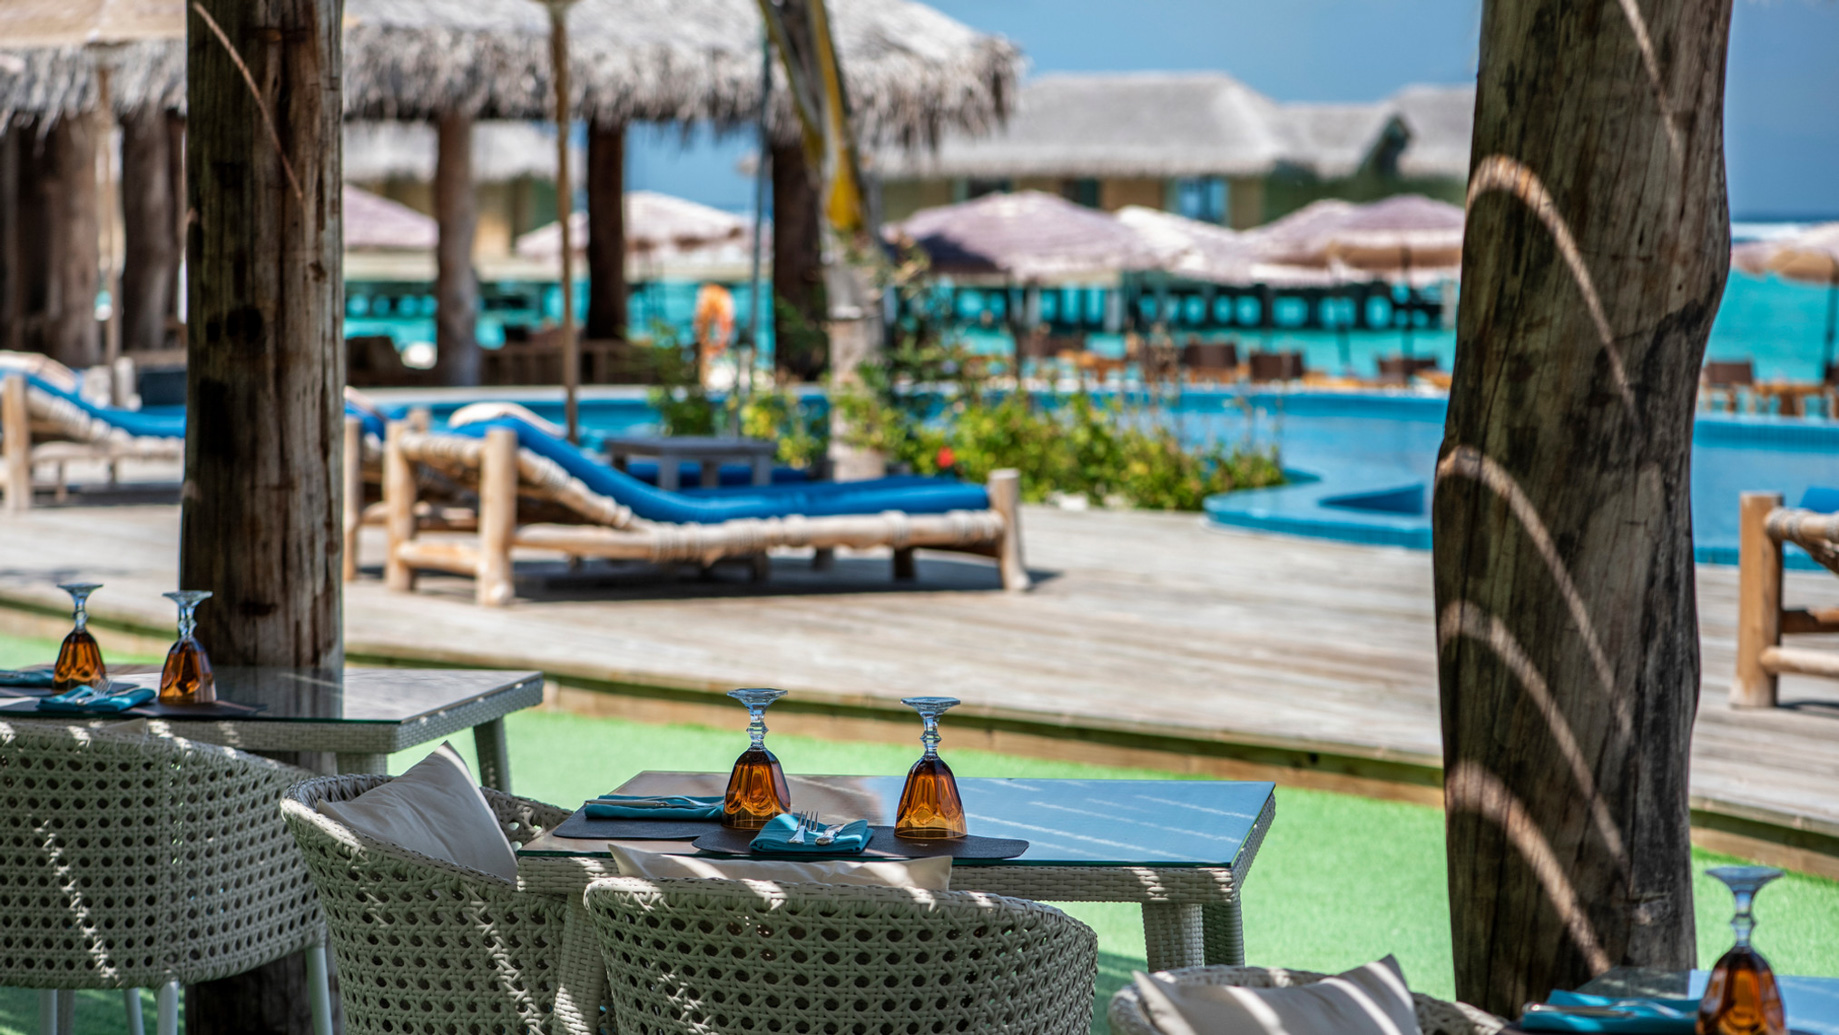 You & Me Maldives Resort – Uthurumaafaru, Raa Atoll, Maldives – Green Carpet Midday Restaurant Tables